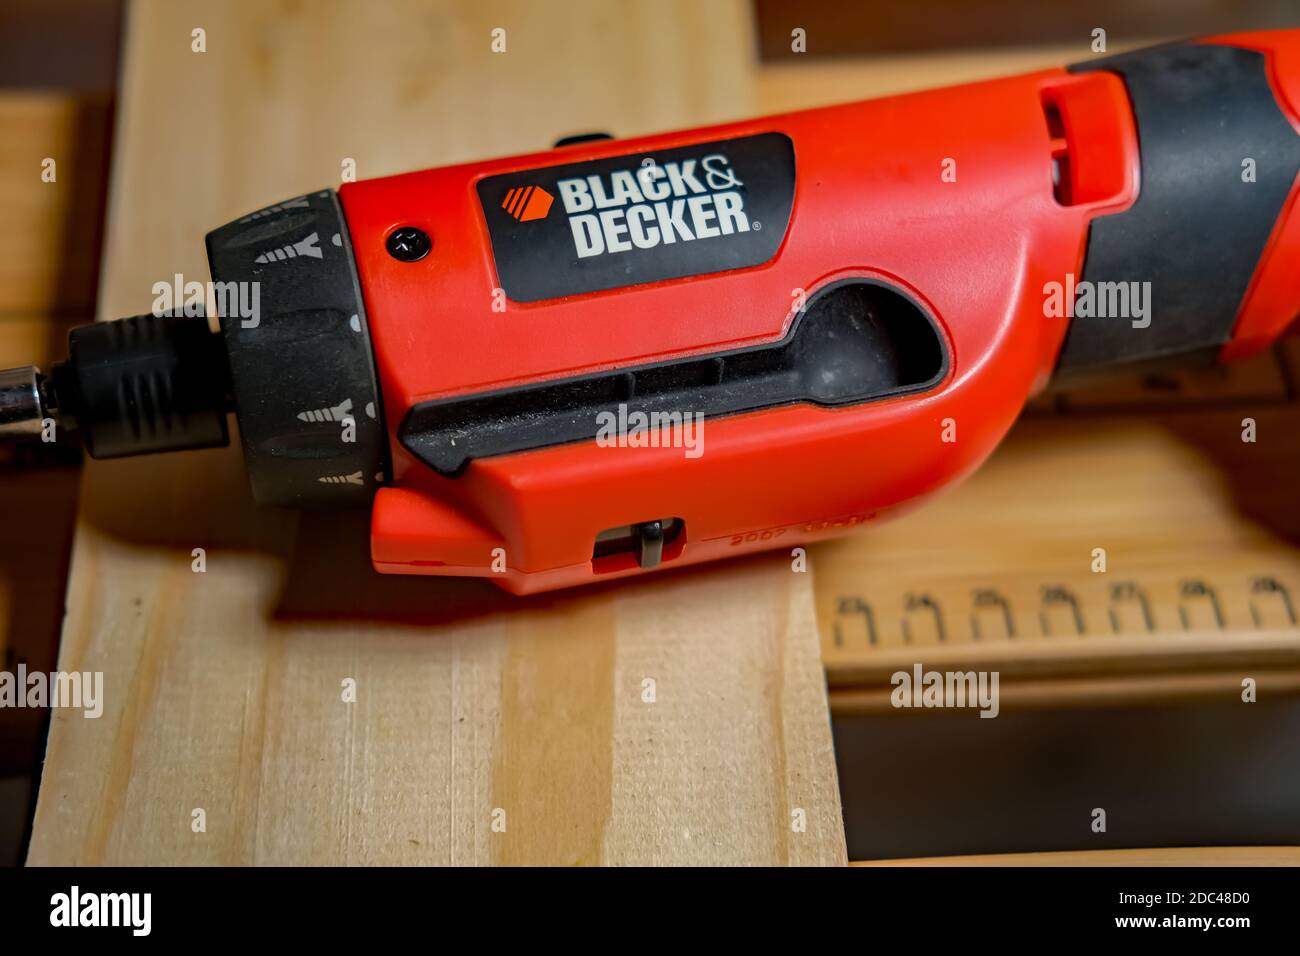 https://c8.alamy.com/comp/2DC48D0/norwich-norfolk-uk-november-17-2020-an-illustrative-photo-of-a-black-decker-cordless-power-screwdriver-on-a-black-decker-workmate-bench-2DC48D0.jpg